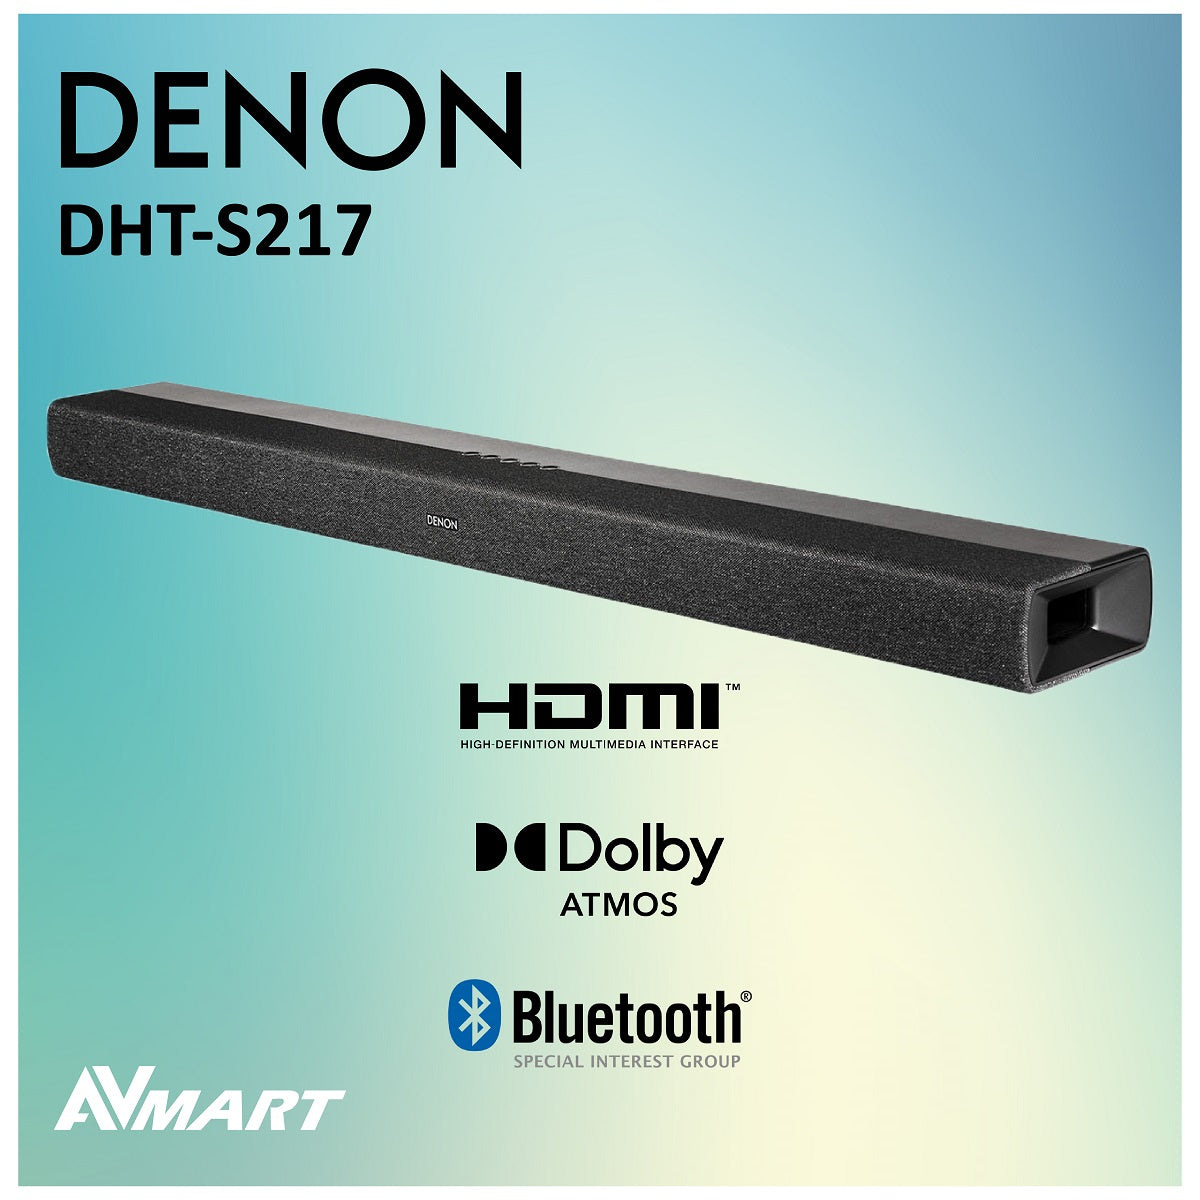 杜比全景聲2.1 一體式家居音響DHTS217 Dolby ATMOS Soundbar 天龍DHT-S217 AV MART DENON –